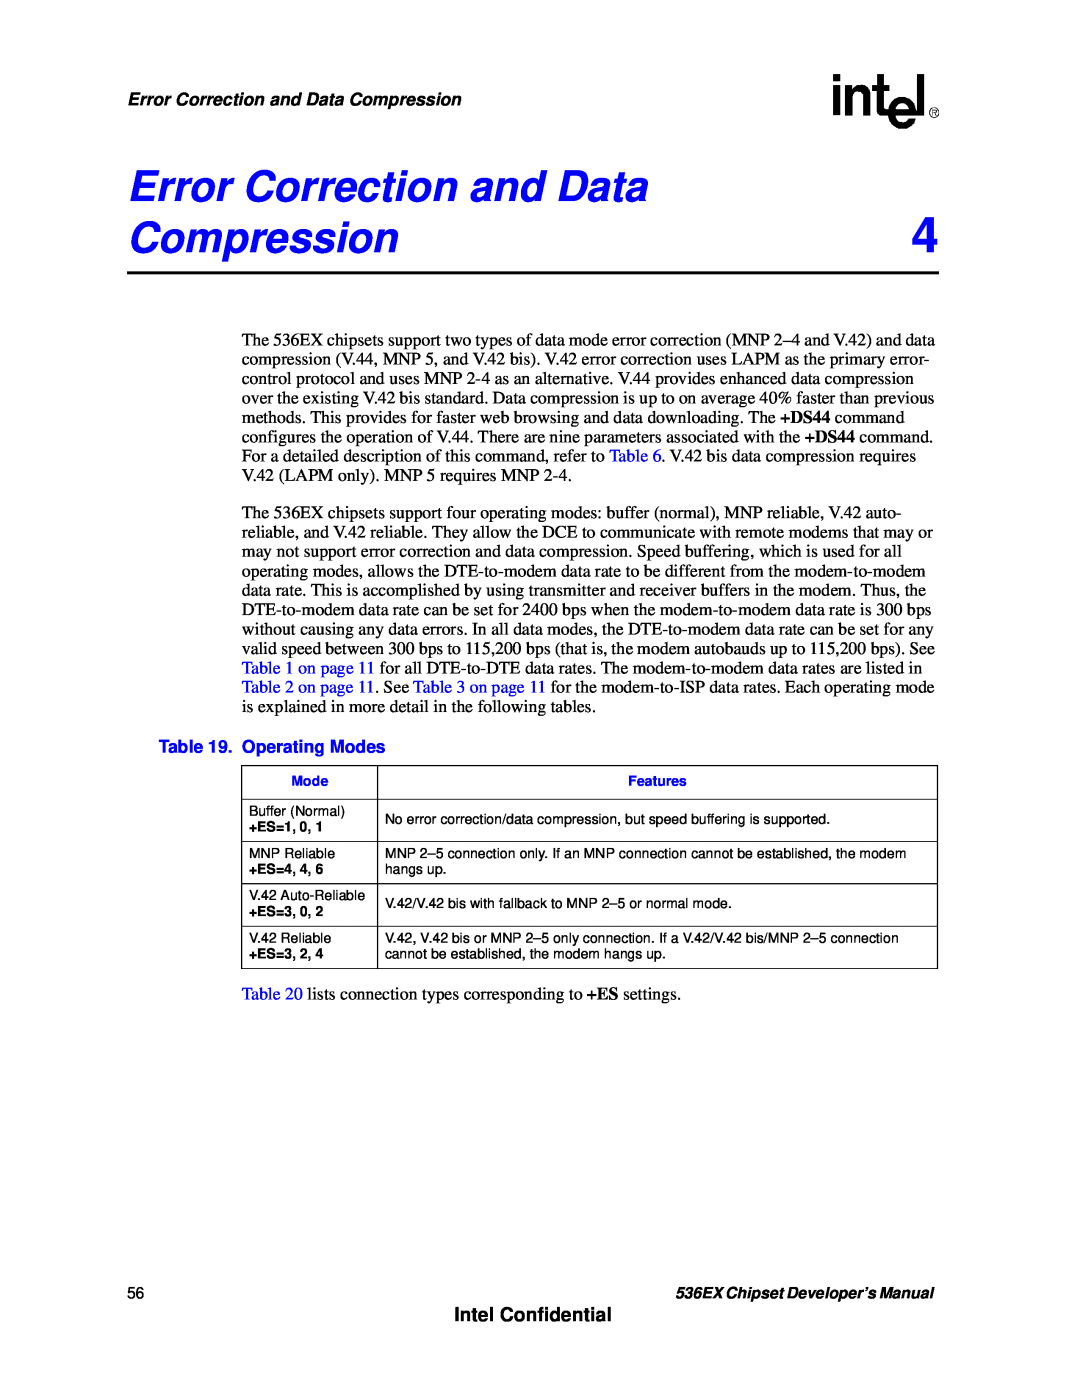 Intel 536EX manual Error Correction and Data Compression4, Intel Confidential, Operating Modes 